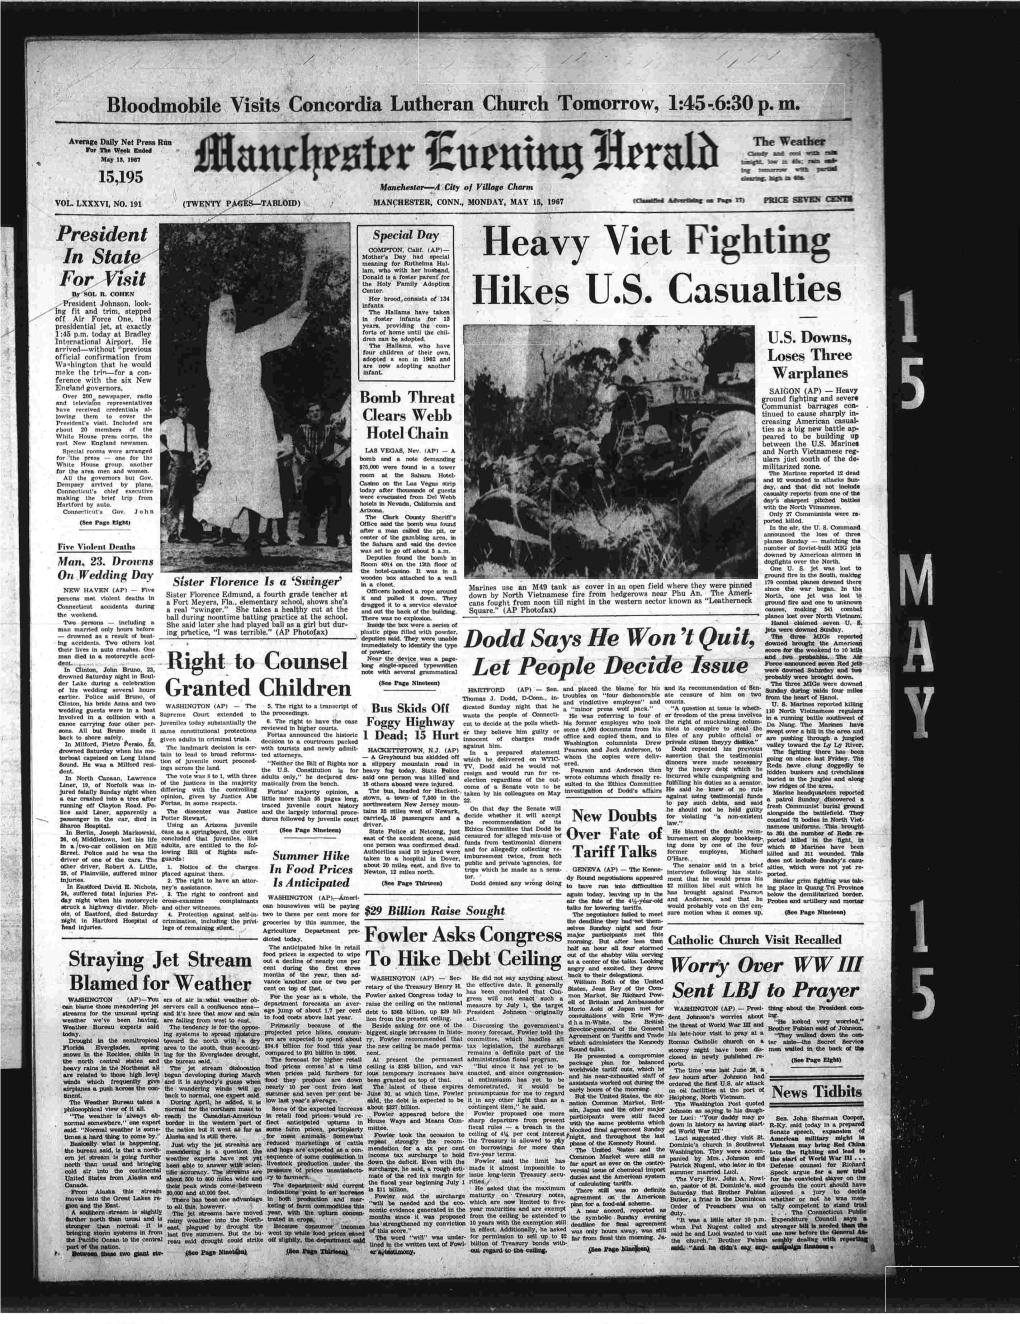 Heavy Viet Hikes Casualties